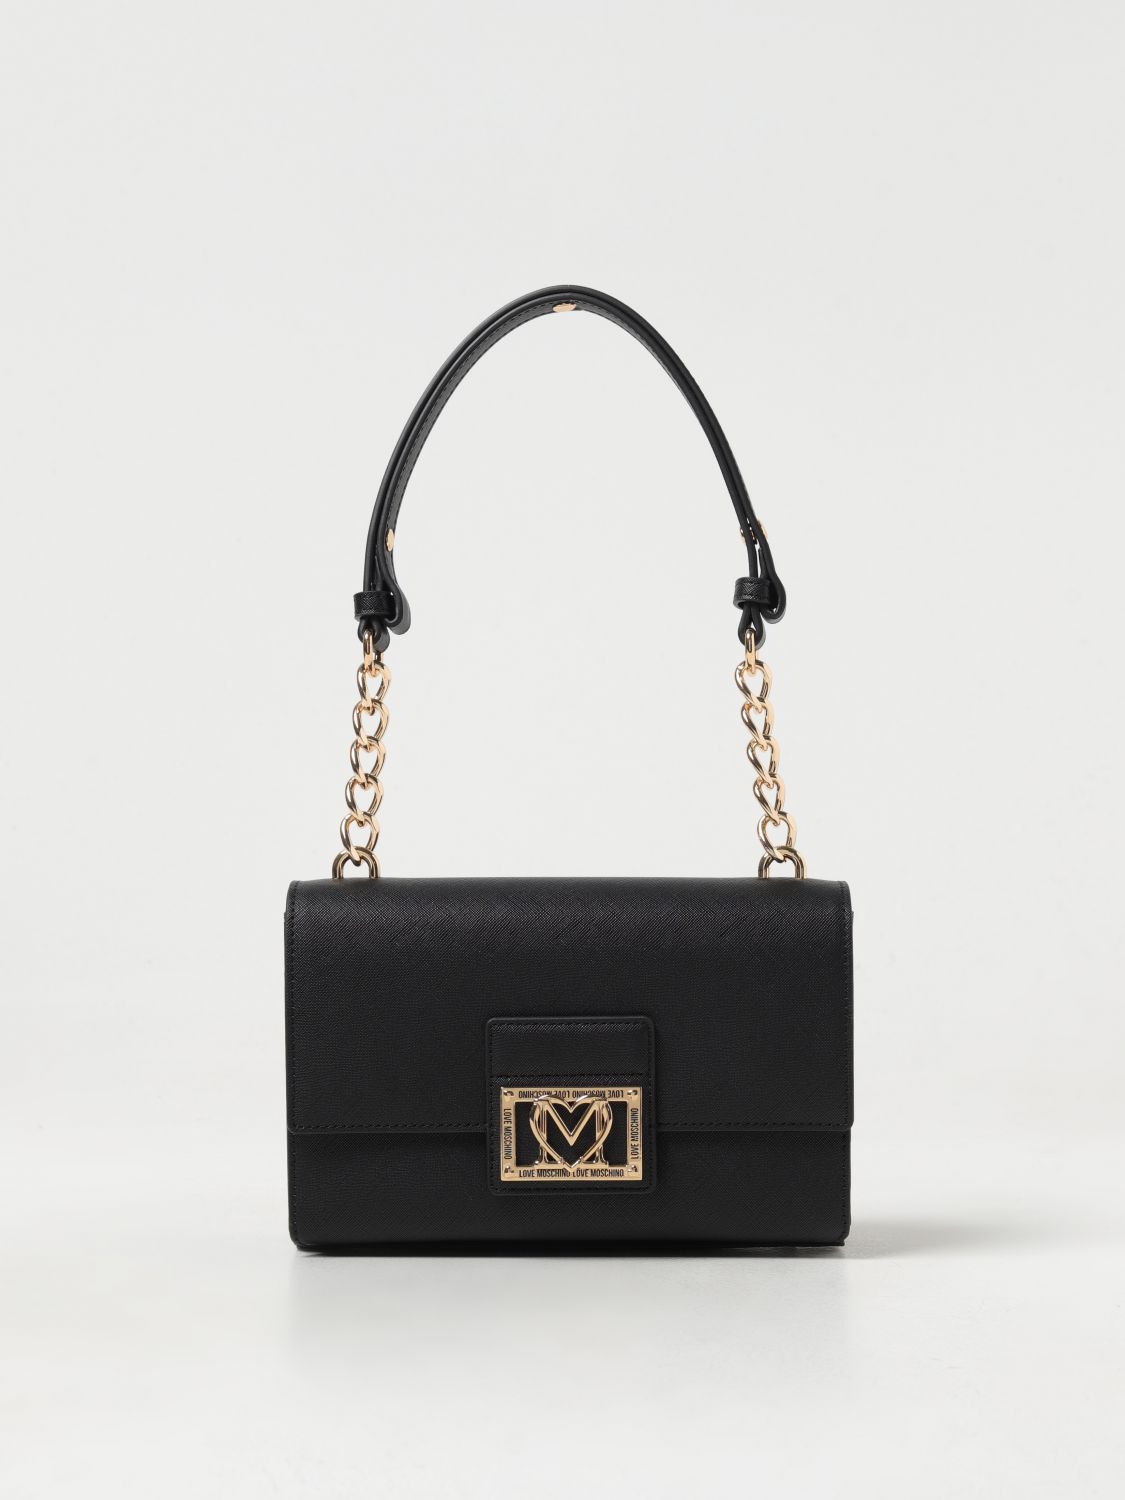 Love Moschino Shoulder Bag LOVE MOSCHINO Woman colour Black